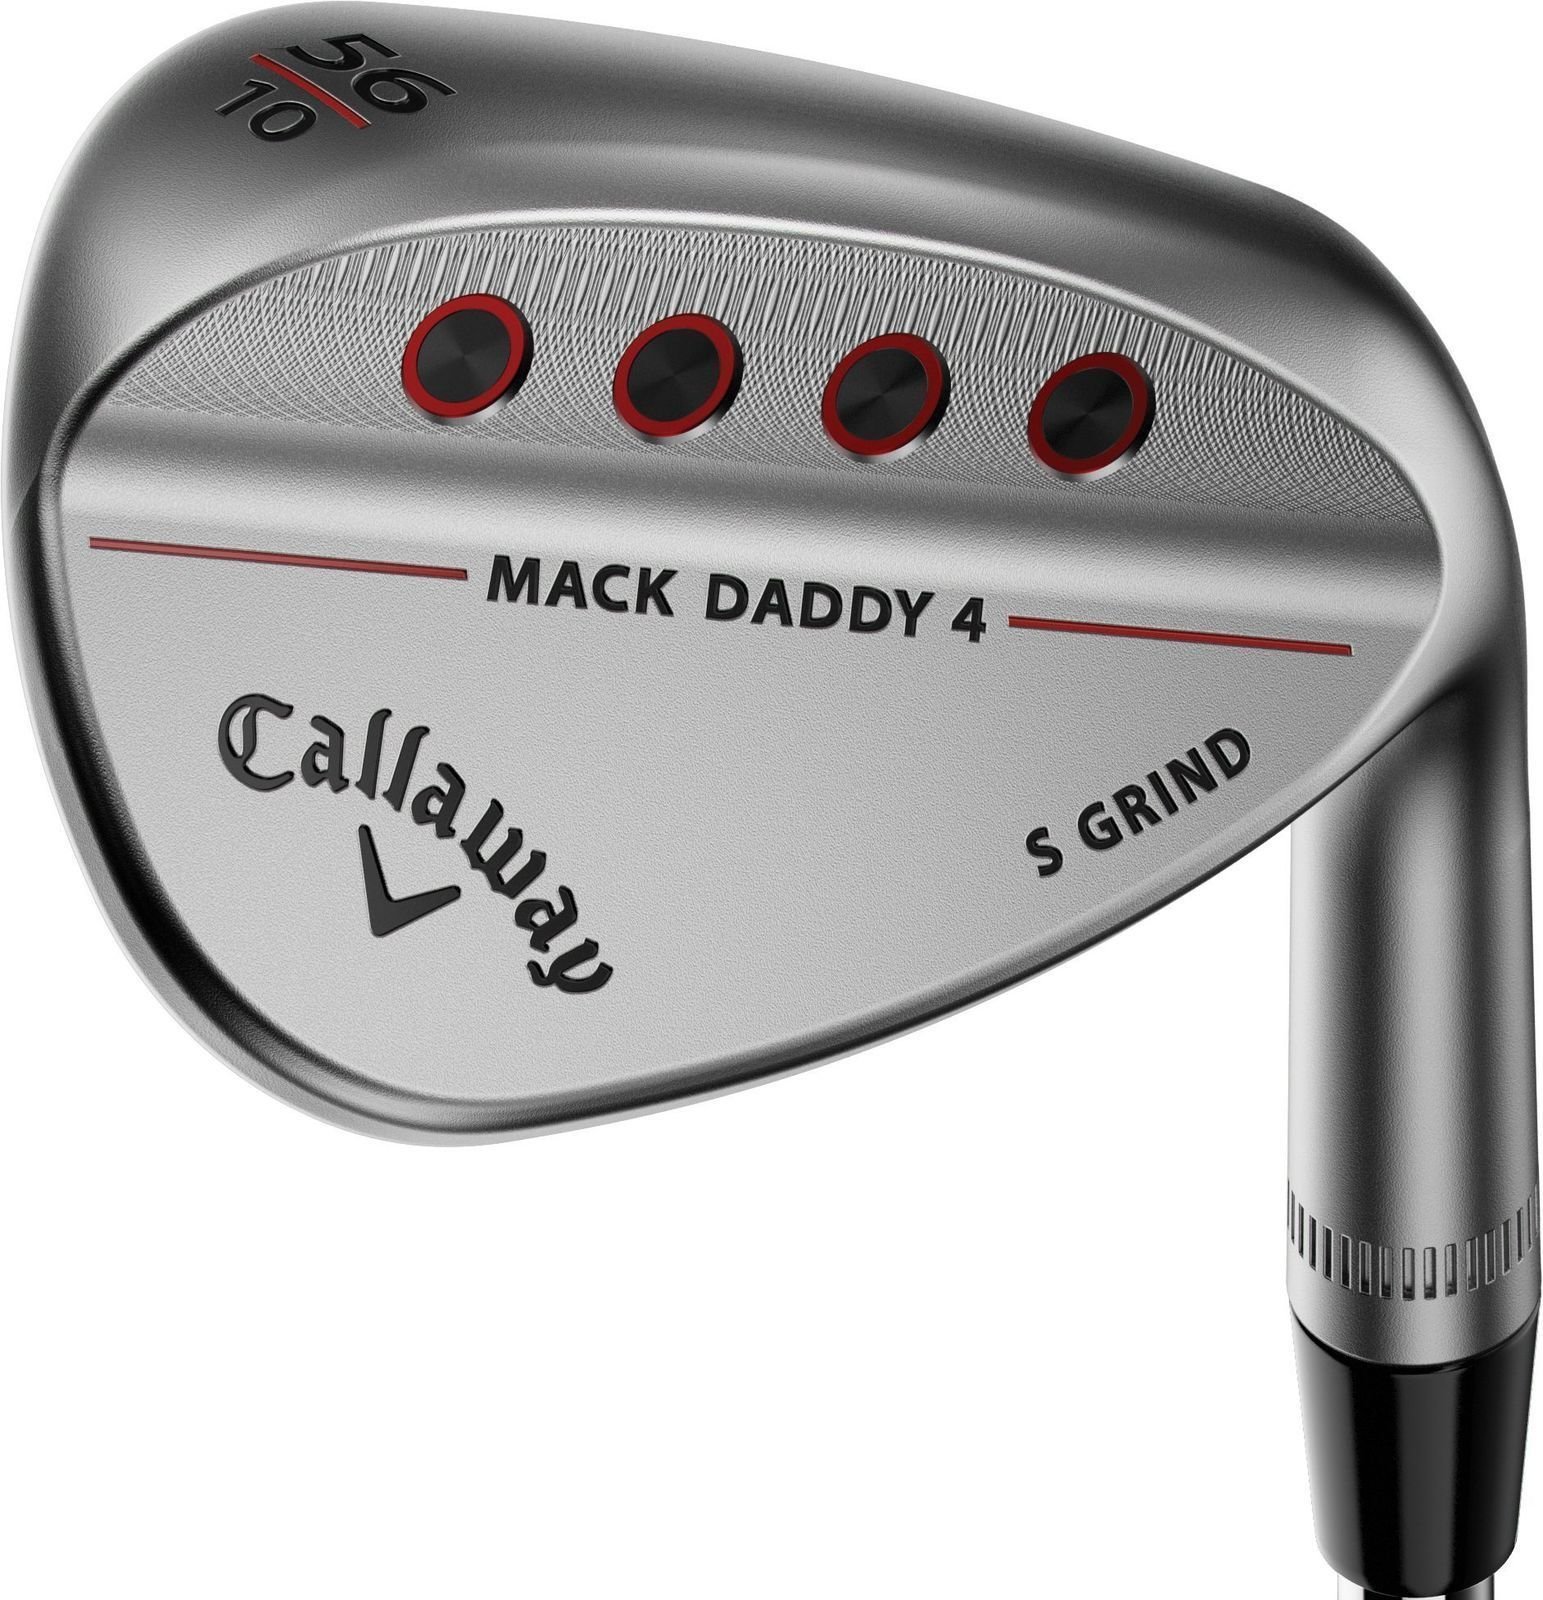 Mazza da golf - wedge Callaway Mack Daddy 4 Chrome Wedge 50-10 S-Grind destro